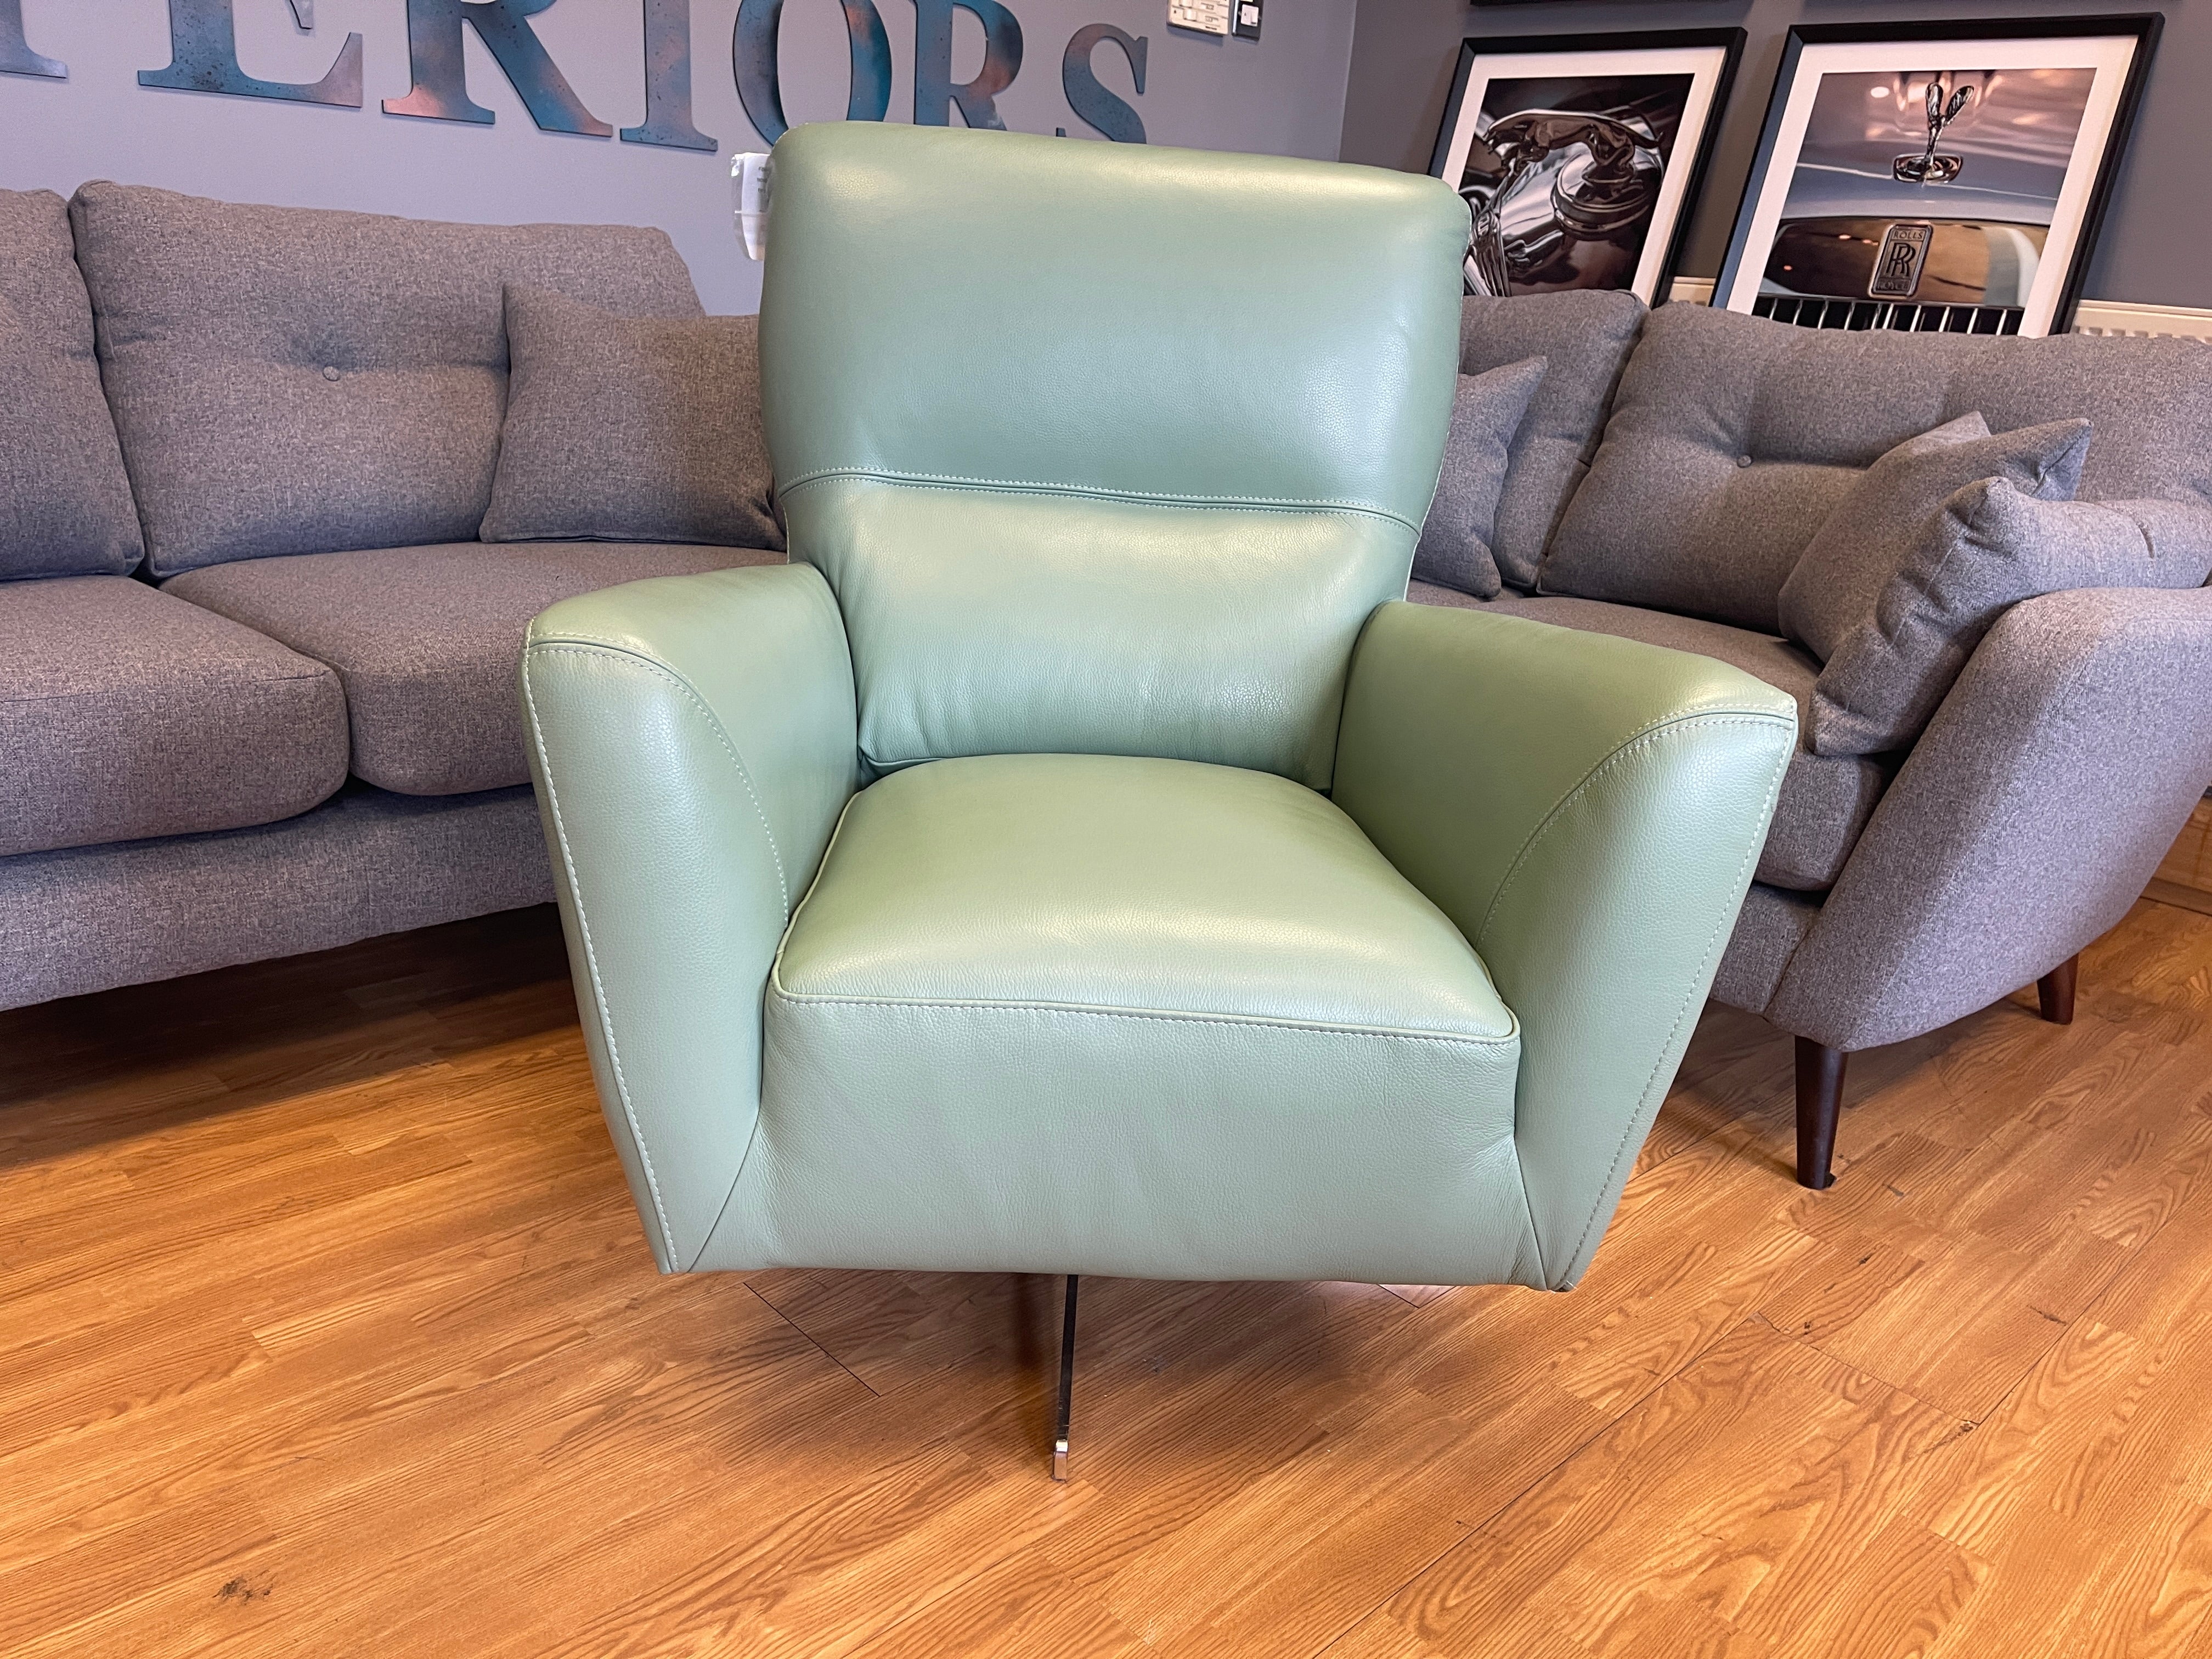 SOFOLOGY ROWAN accent armchair swivel chair in soft mint green soft leather chrome base